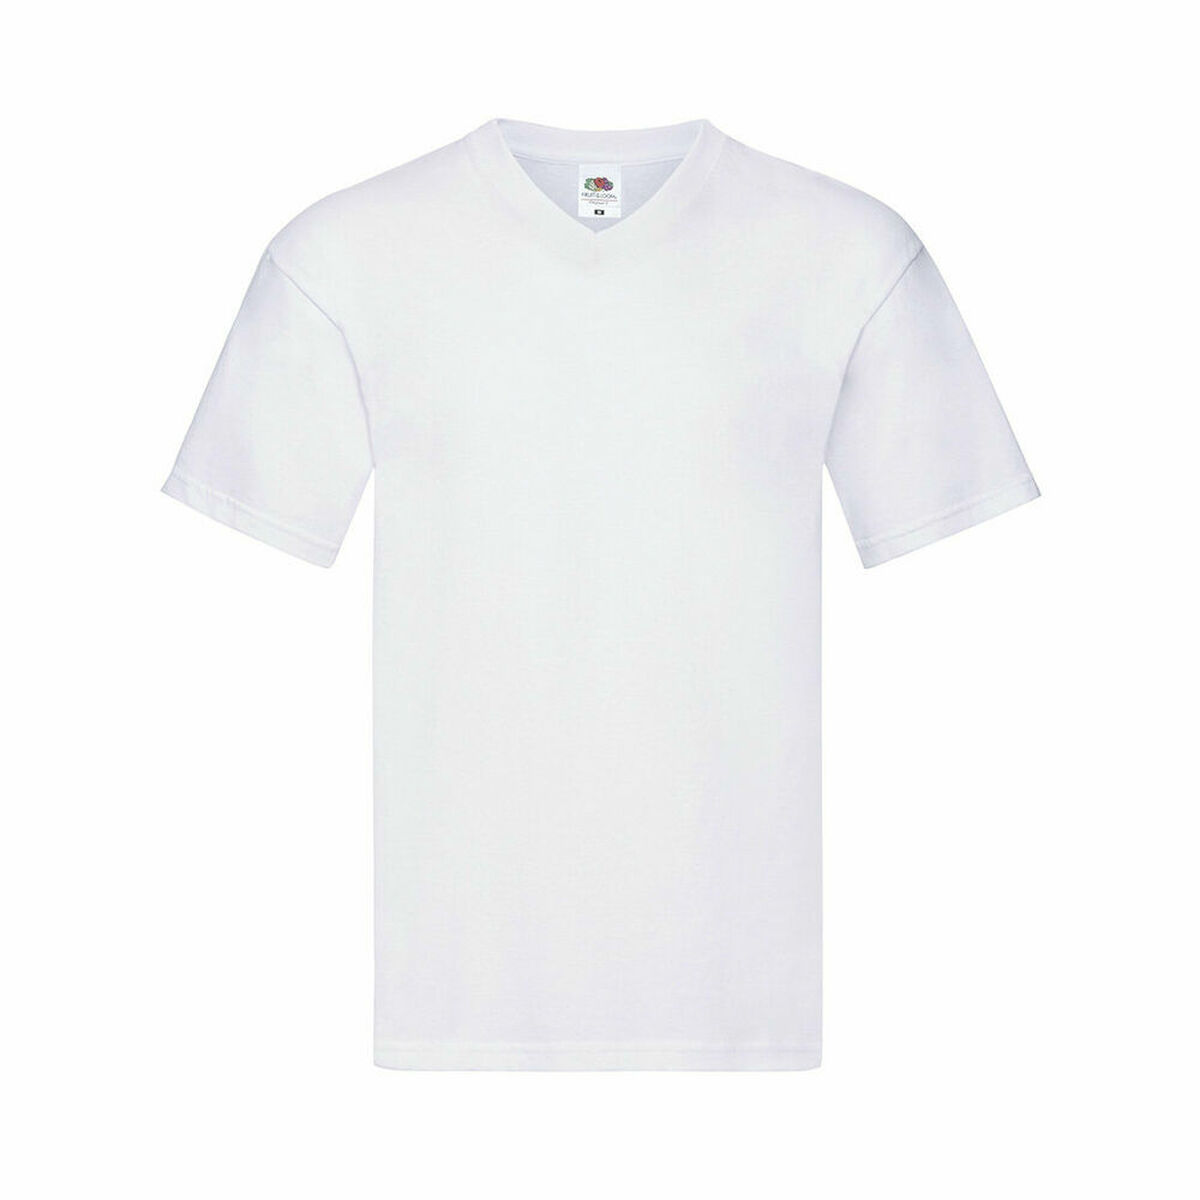 Unisex Short Sleeve T-Shirt 141318 100% cotton